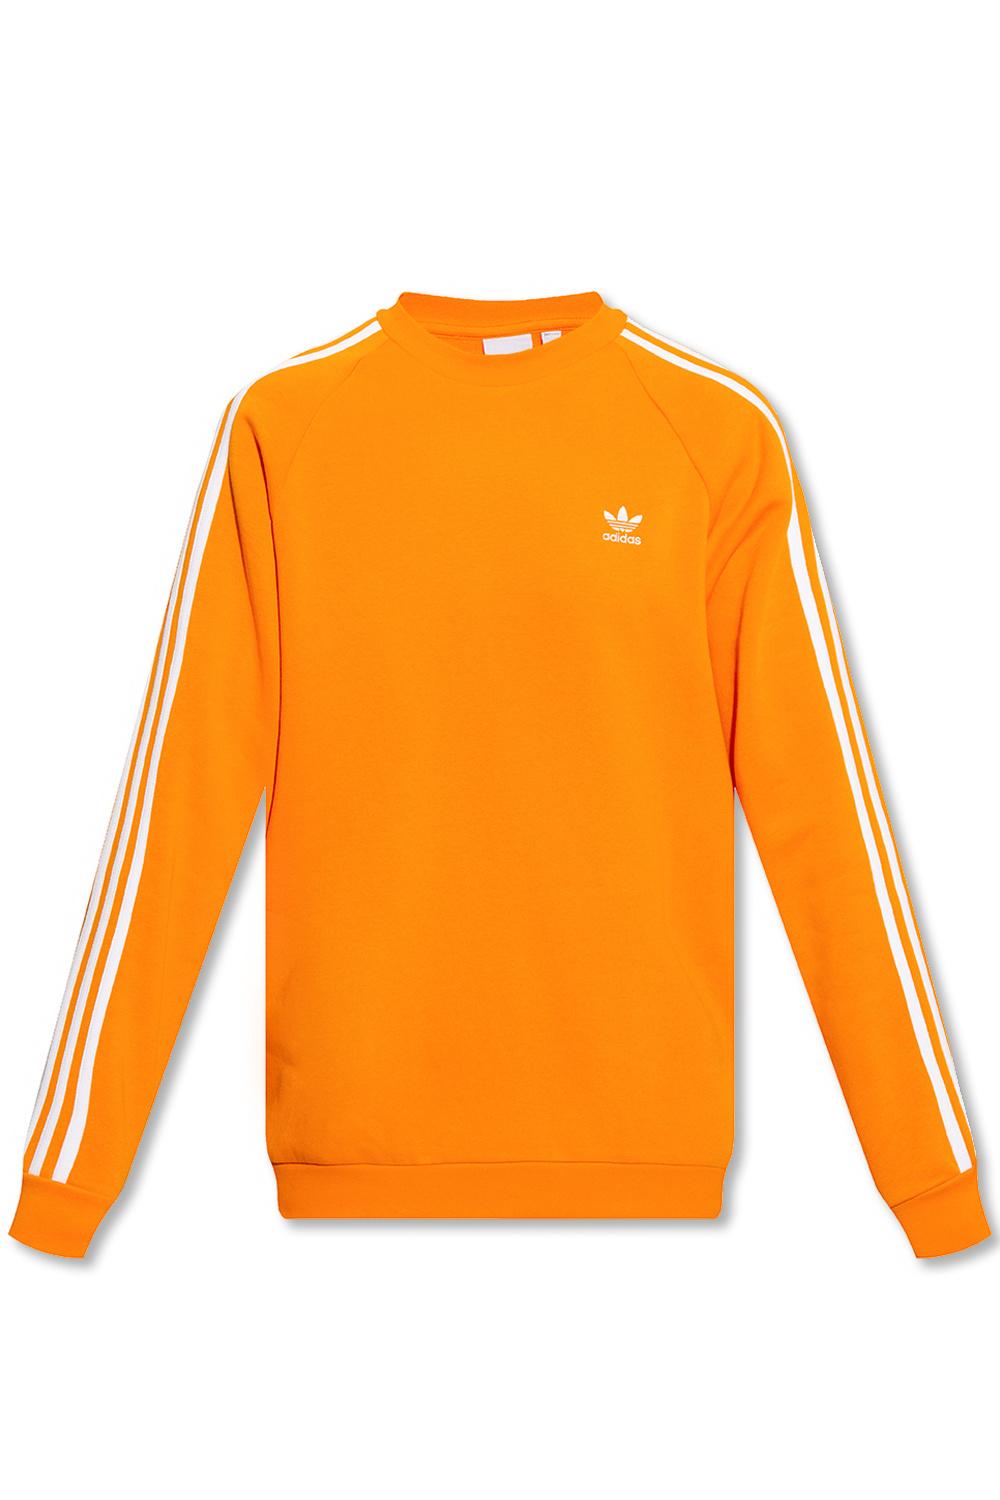 adidas Originals Cotton Sweatshirt With Logo in Orange for Men | Lyst